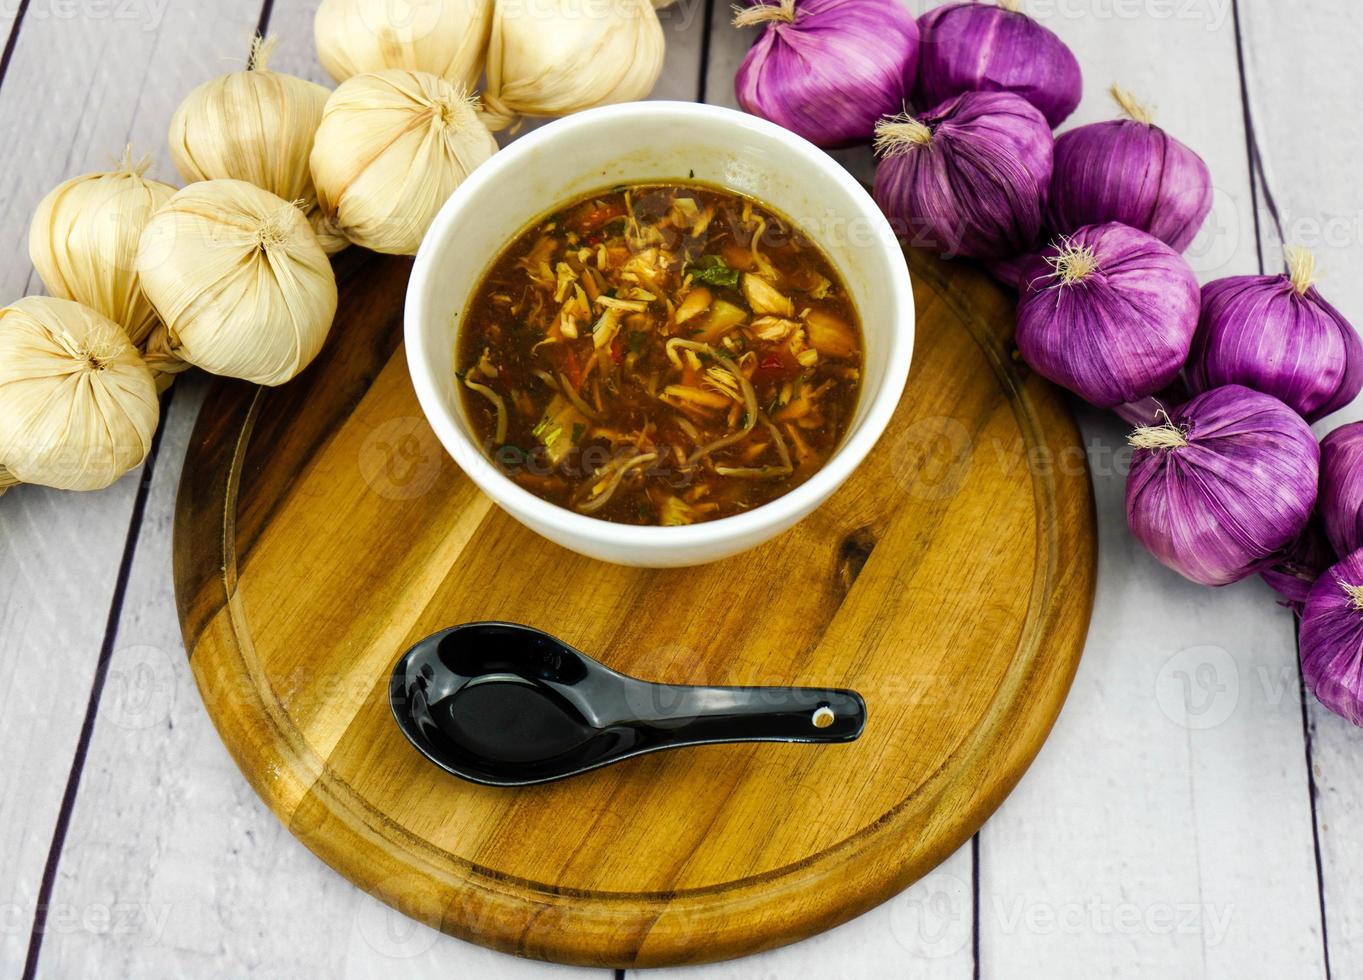 zuppa tradizionale di verdure fresche asiatiche foto